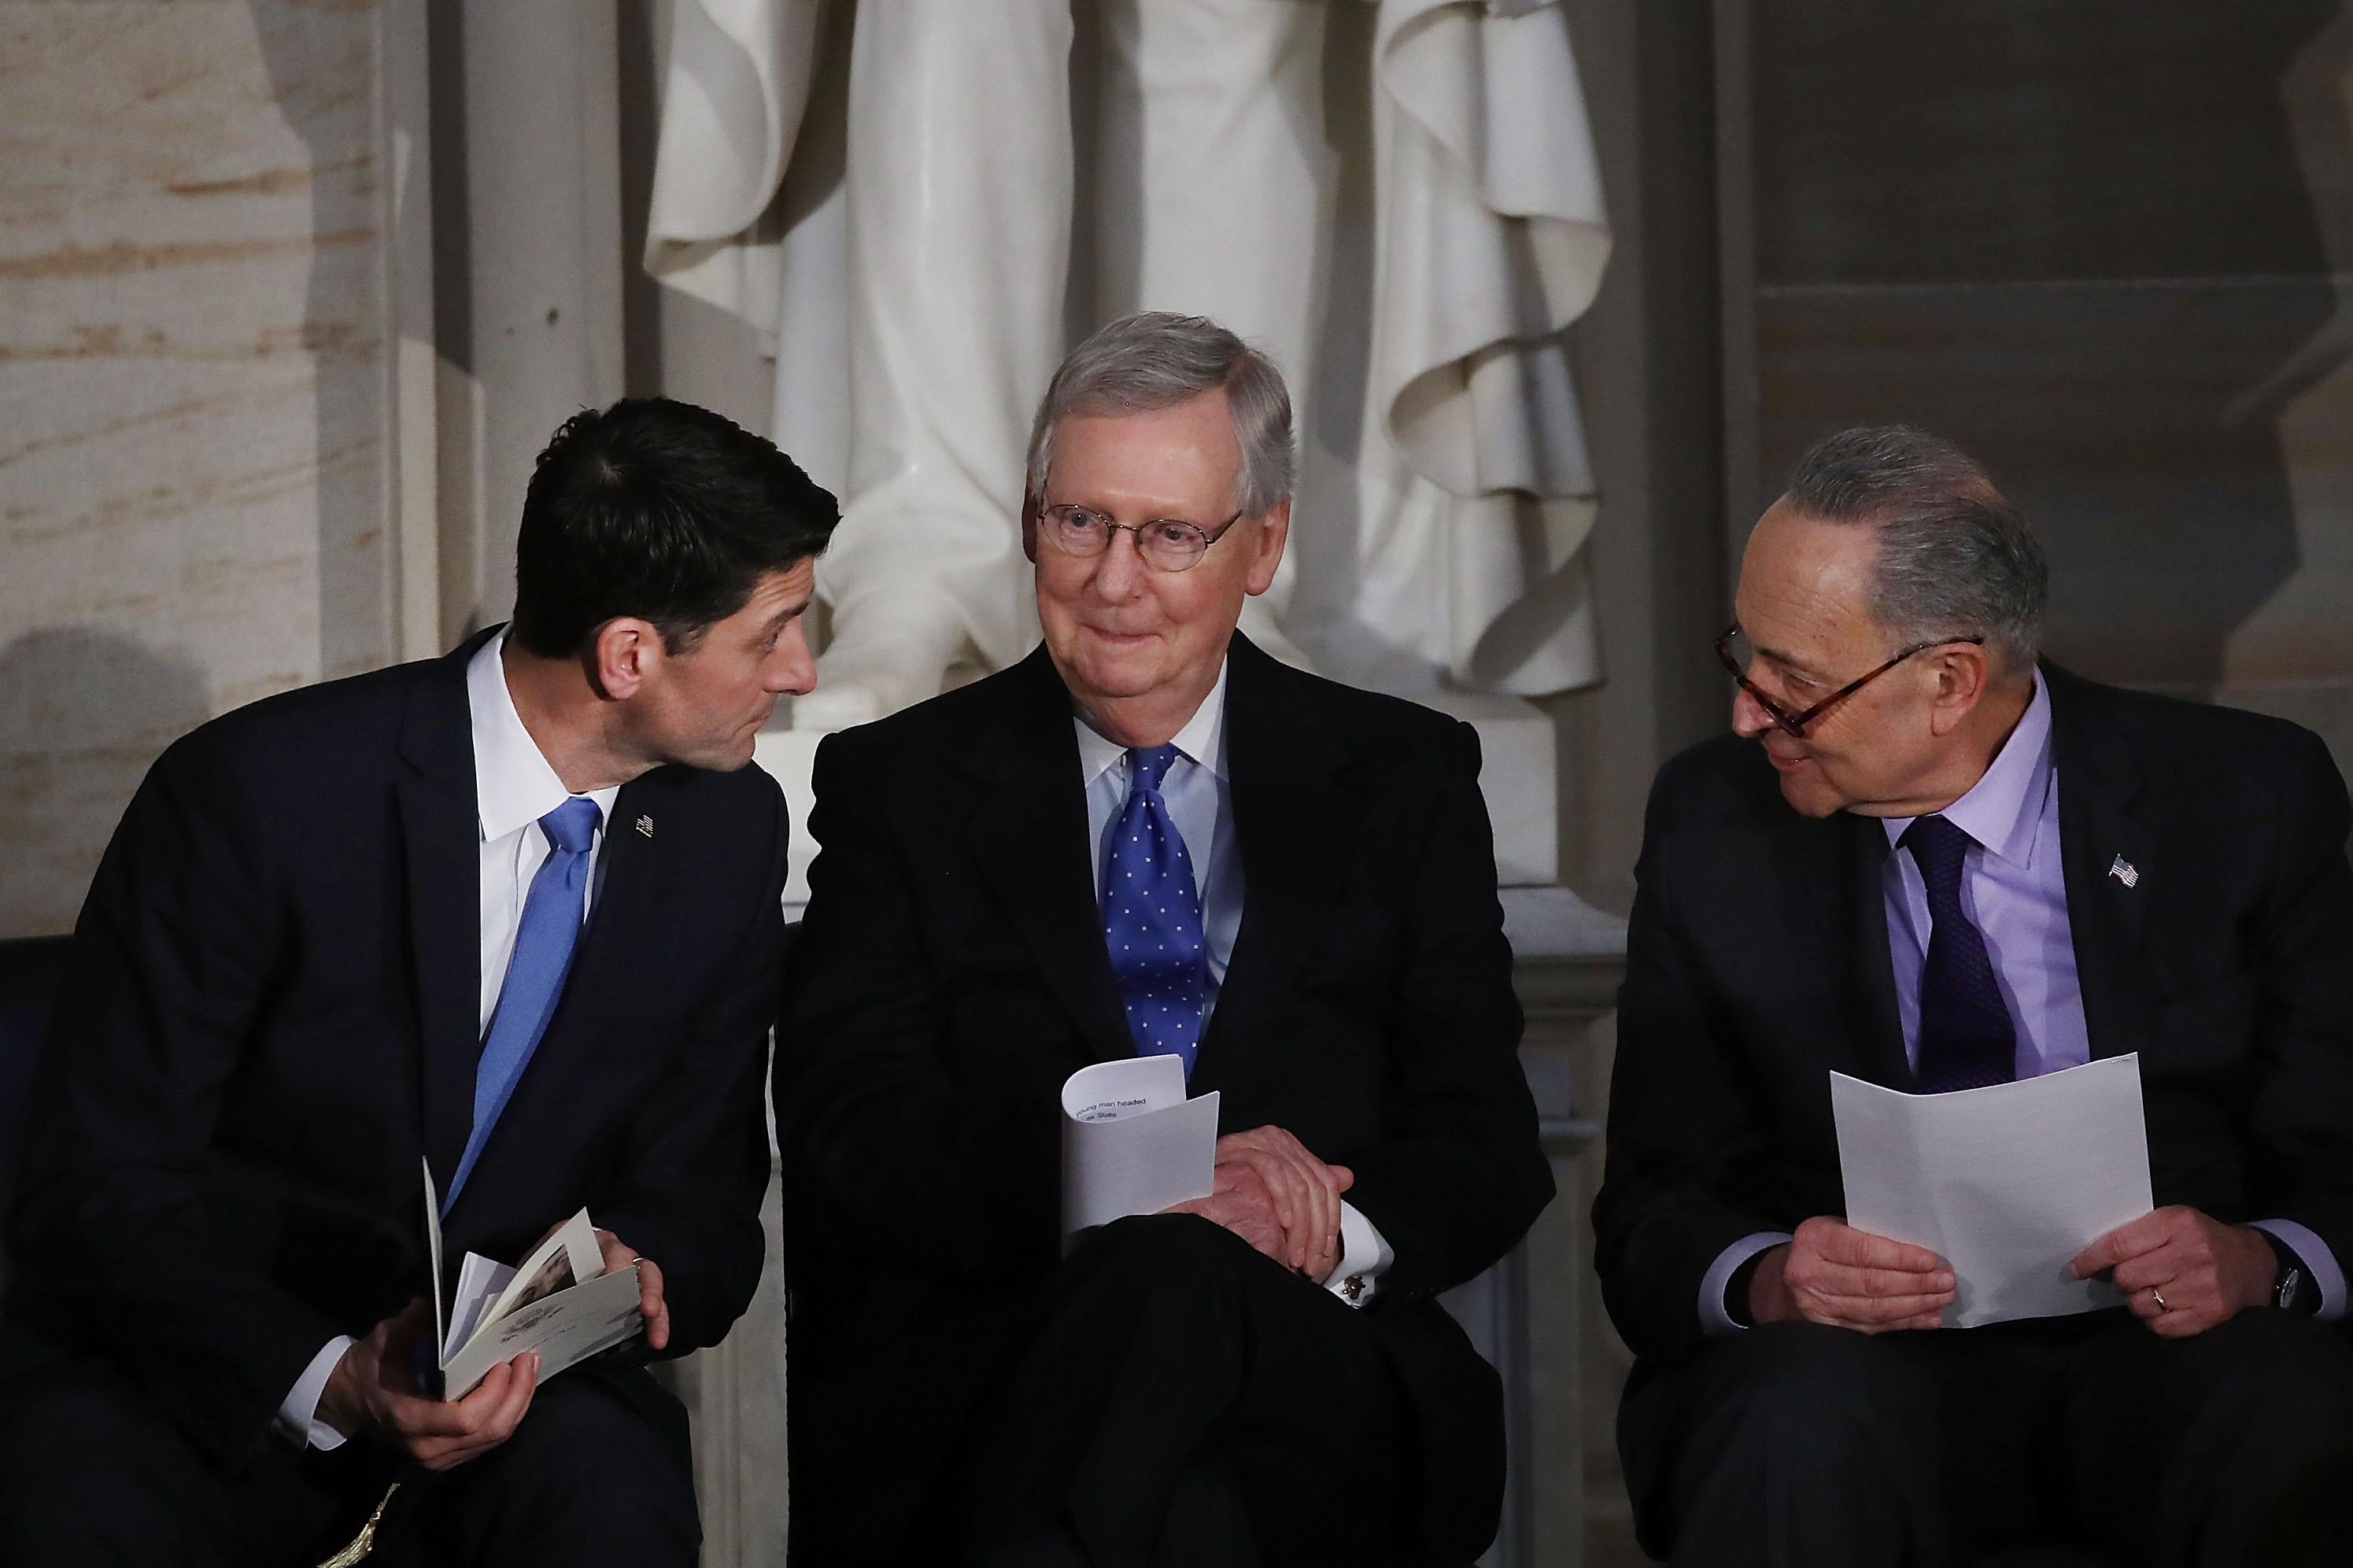 House Speaker Paul Ryan, Senate Majority Leader Mitch McConnell, and Senate Minority Leader Chuck Schumer.